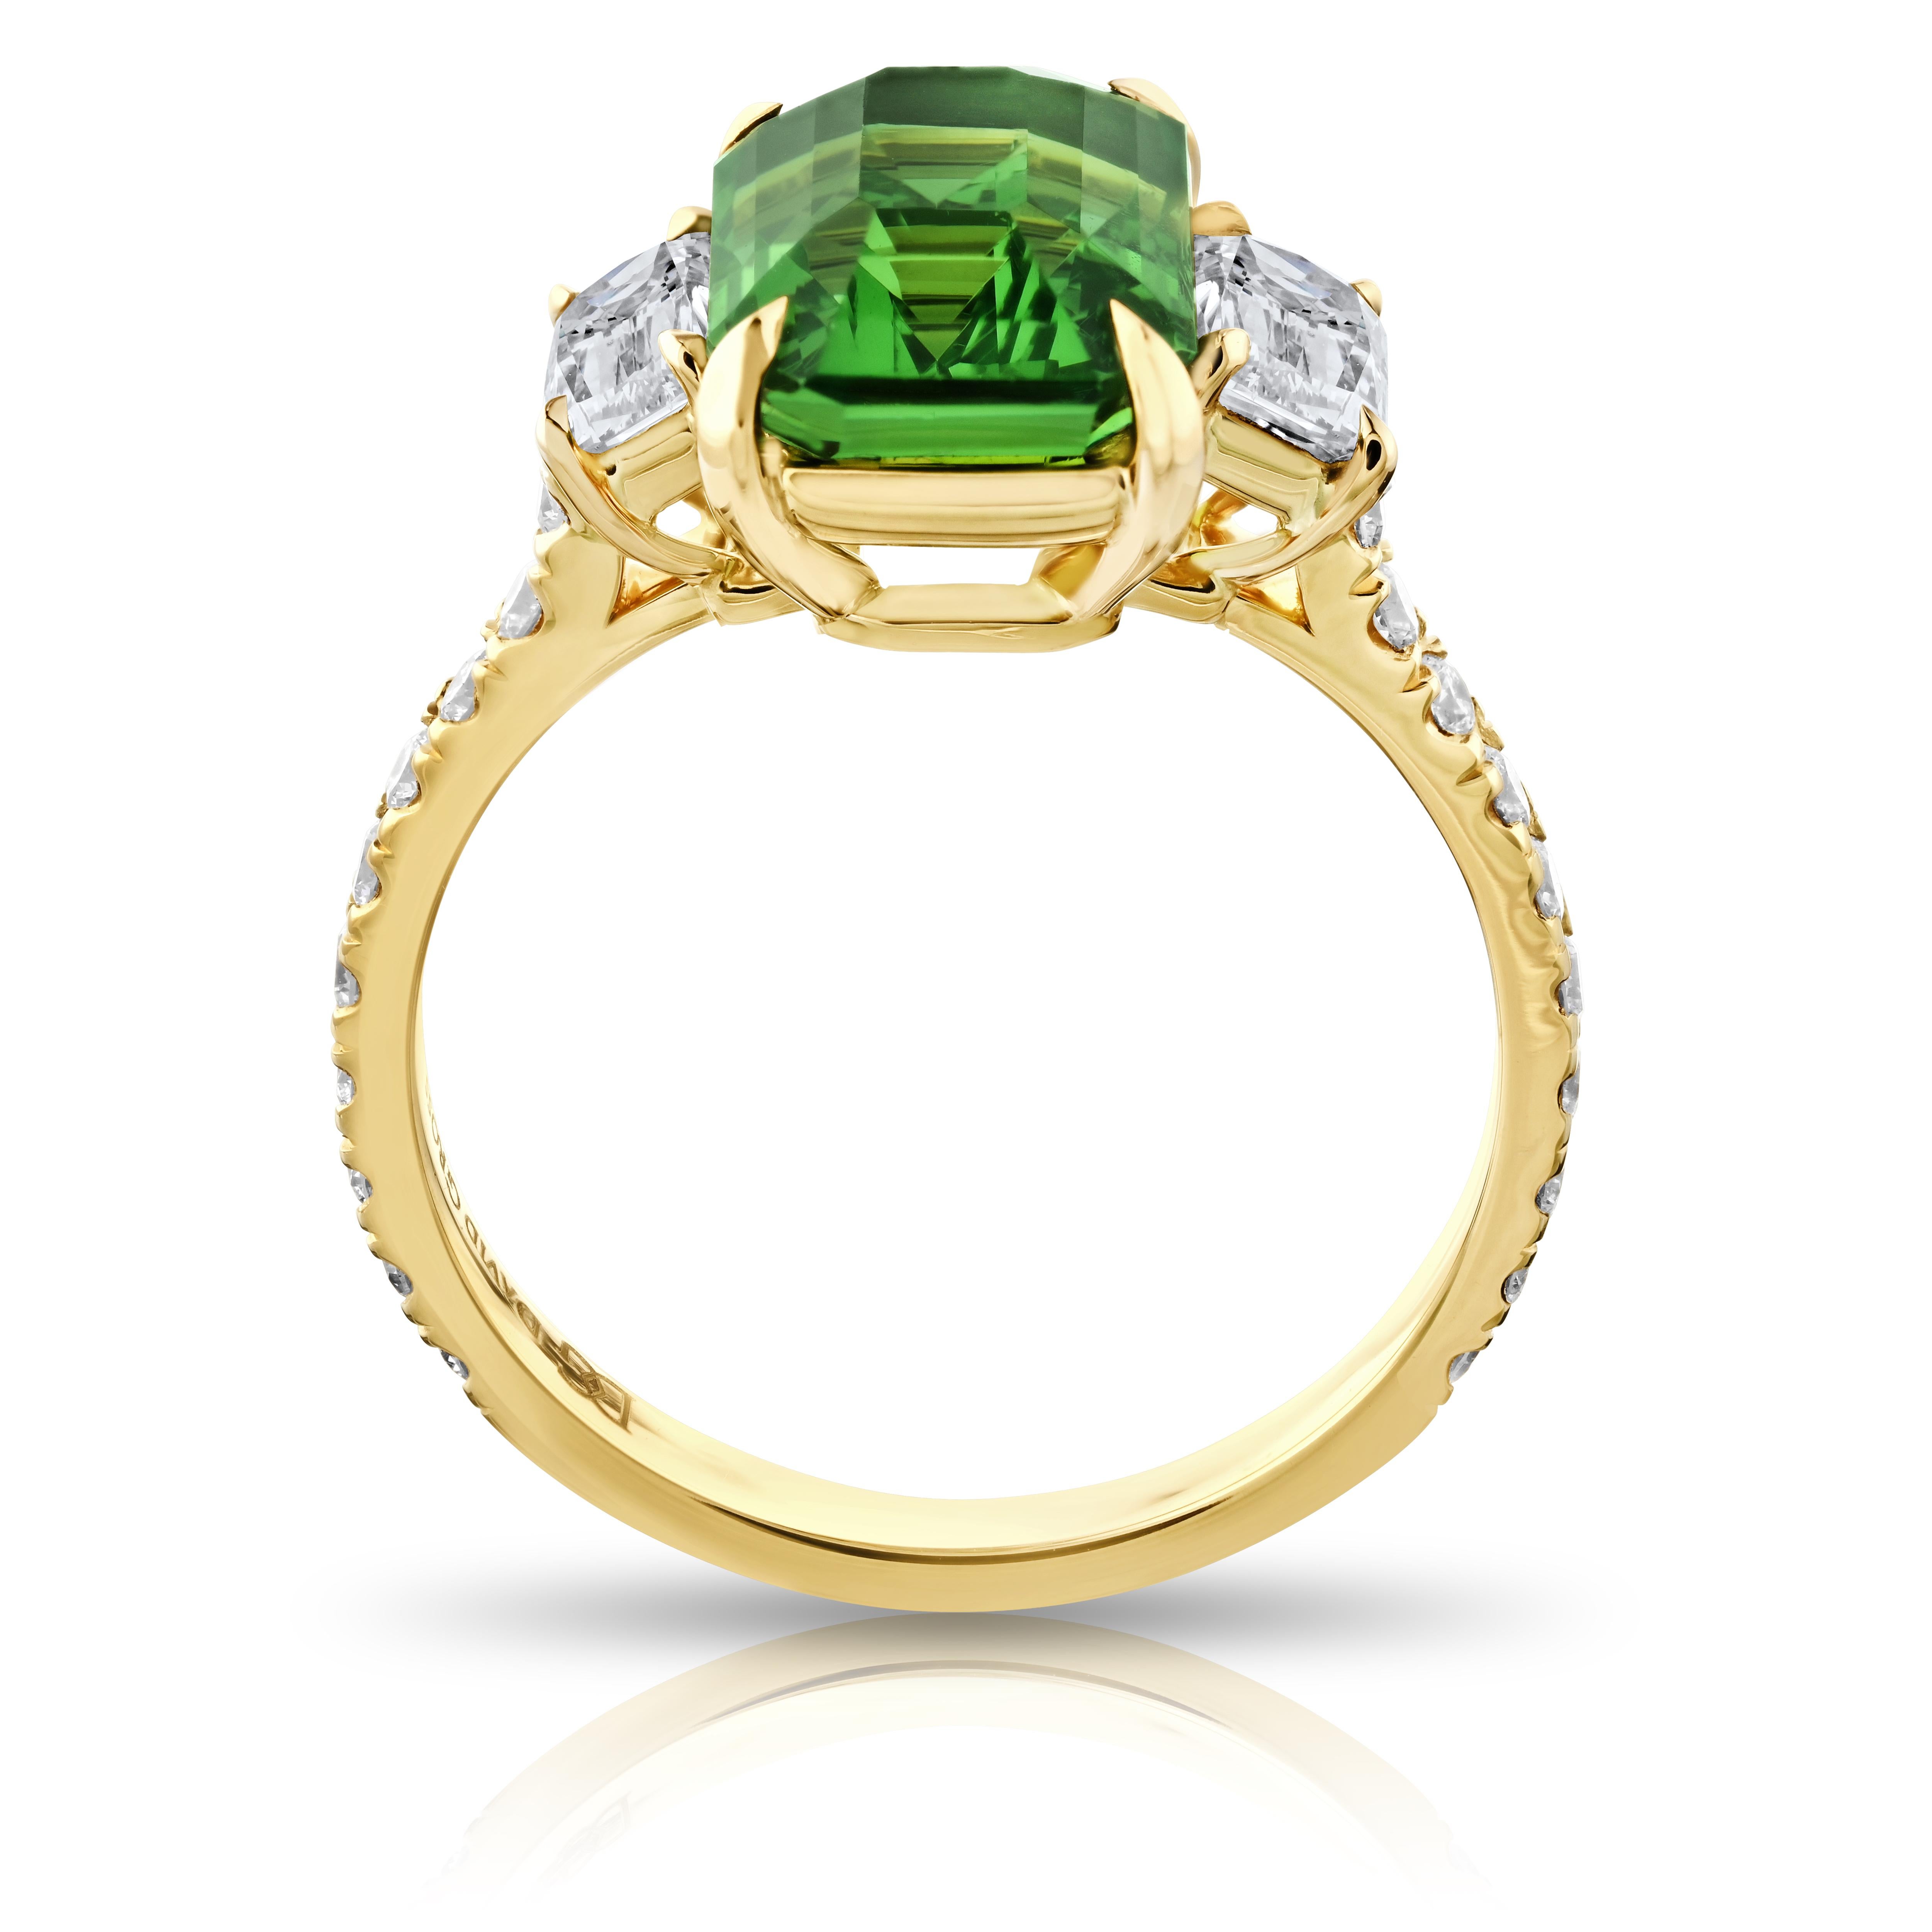 4.02 carat Emerald Cut Green Tsavorite with Diamonds 0.64 carats set in a handmade 18k YG ring